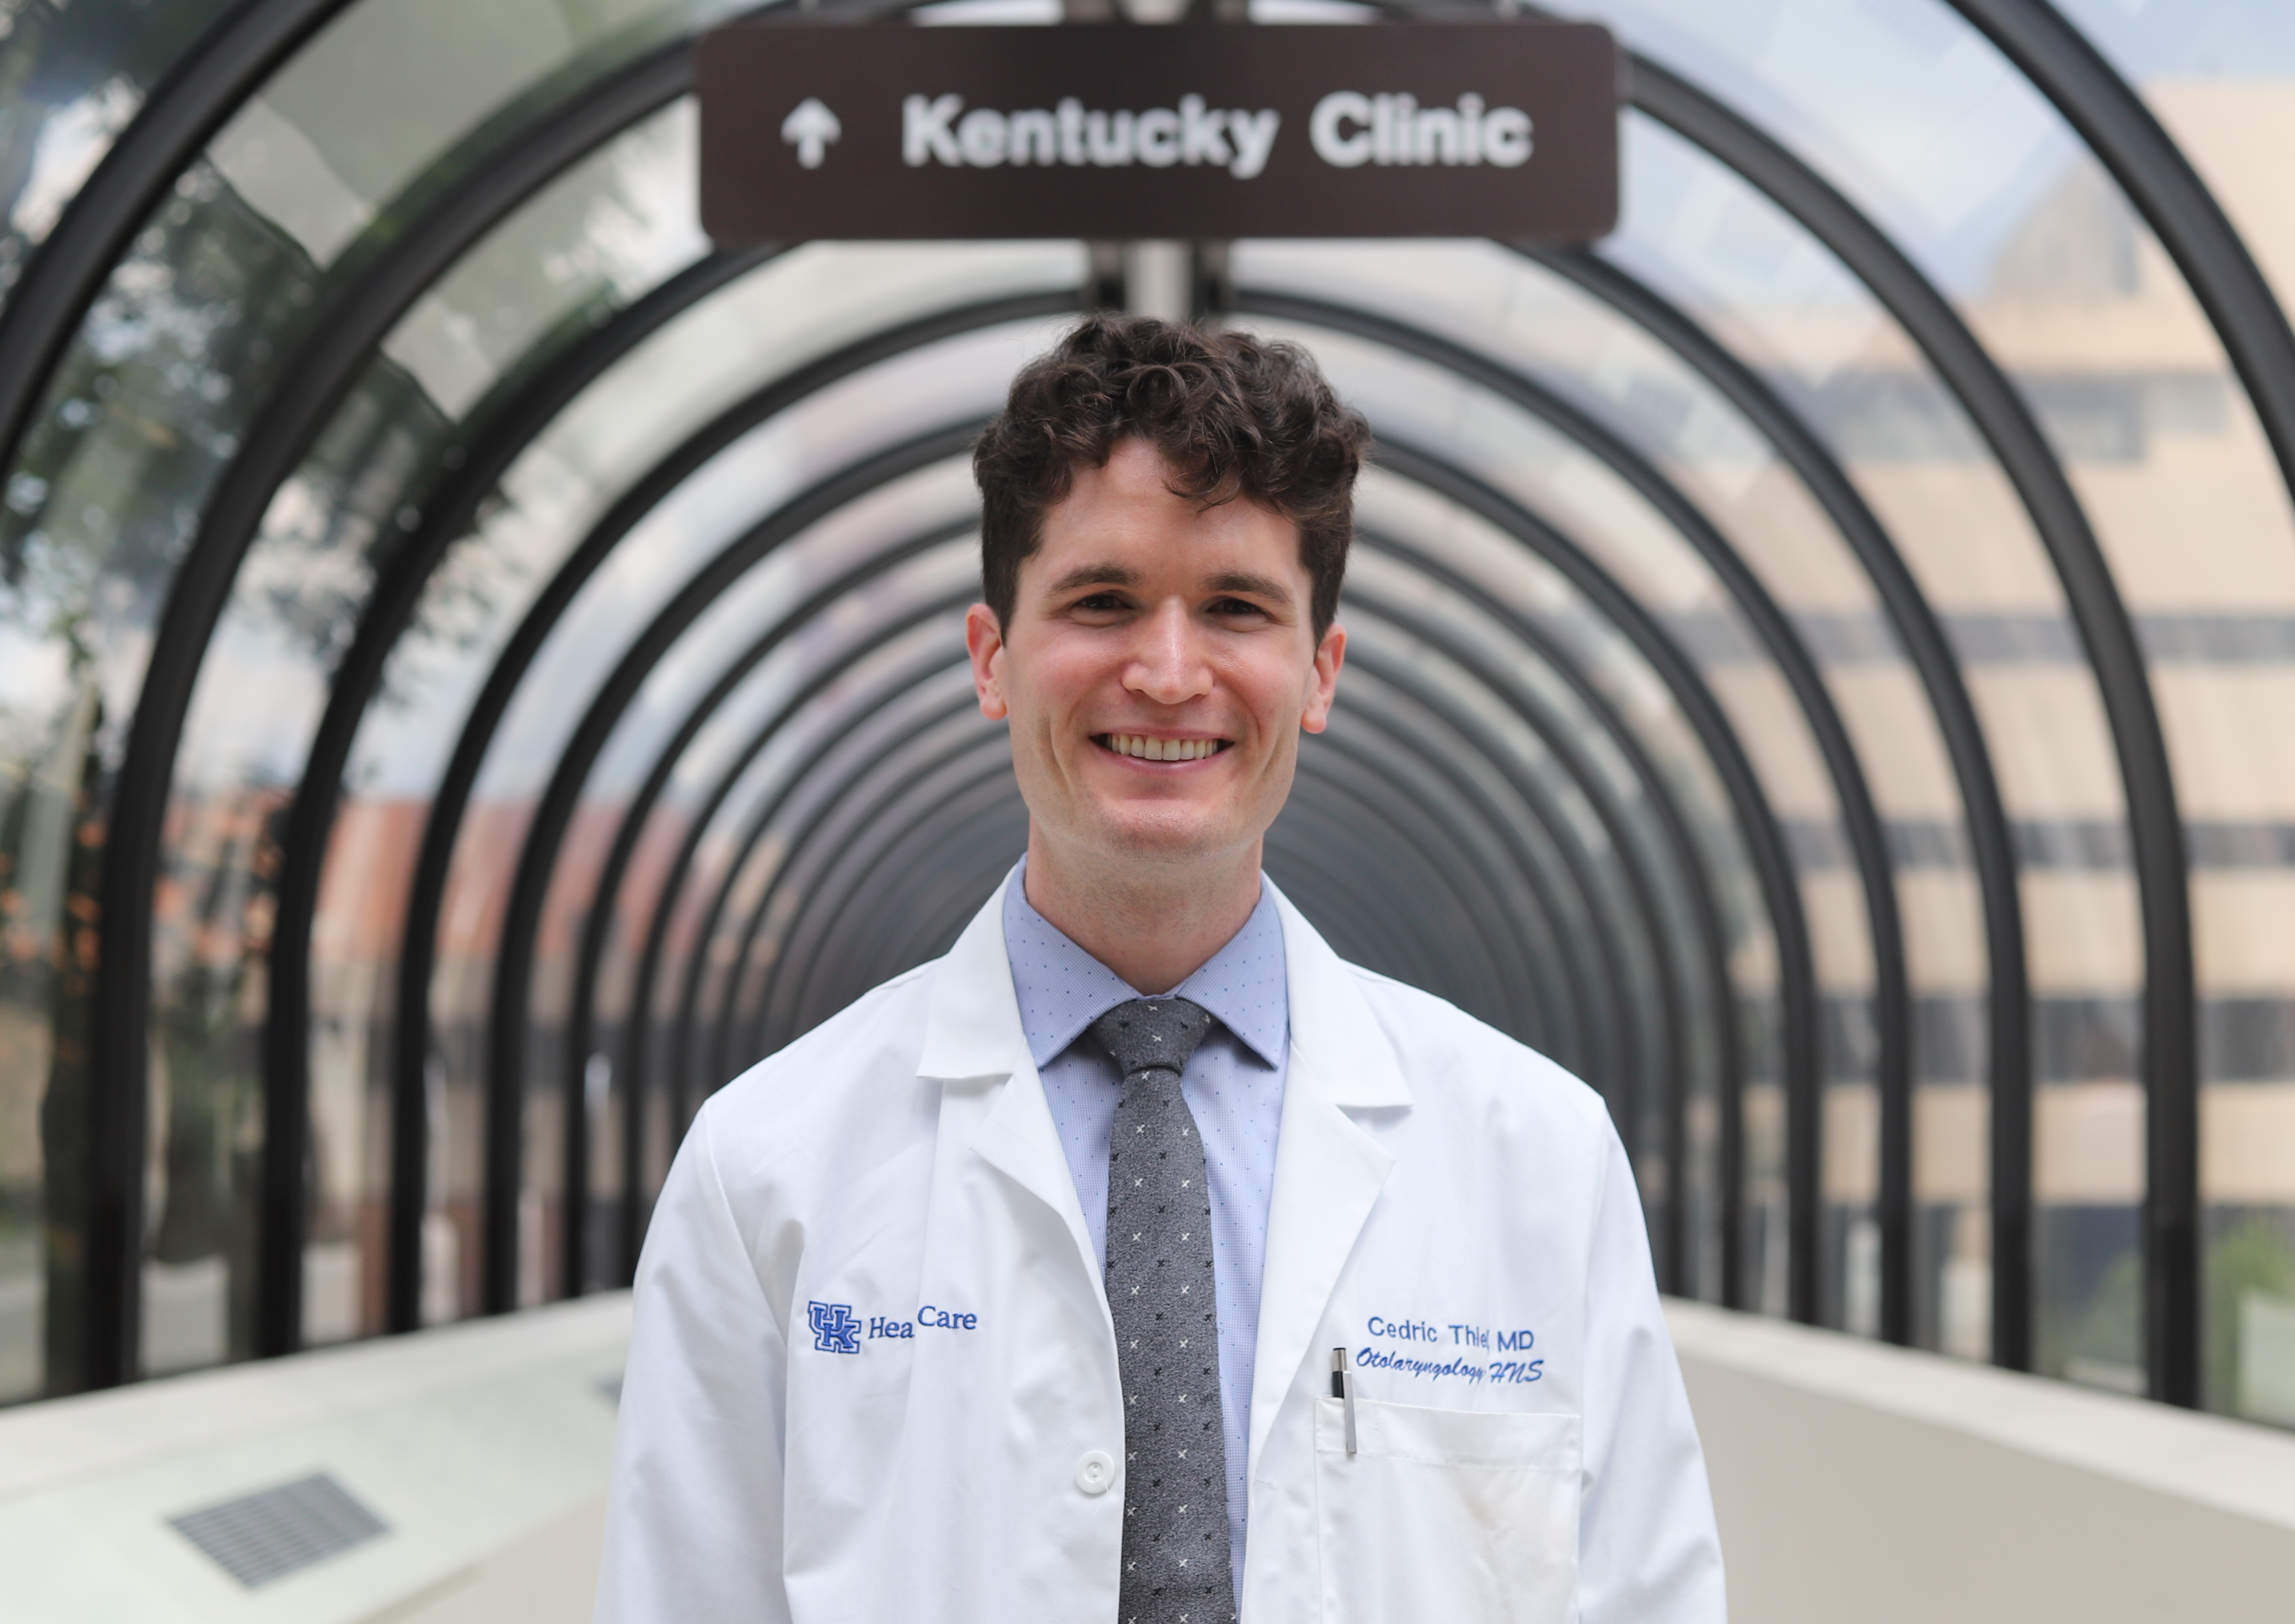 Cedric Thiel posing in Kentucky Clinic's pedway